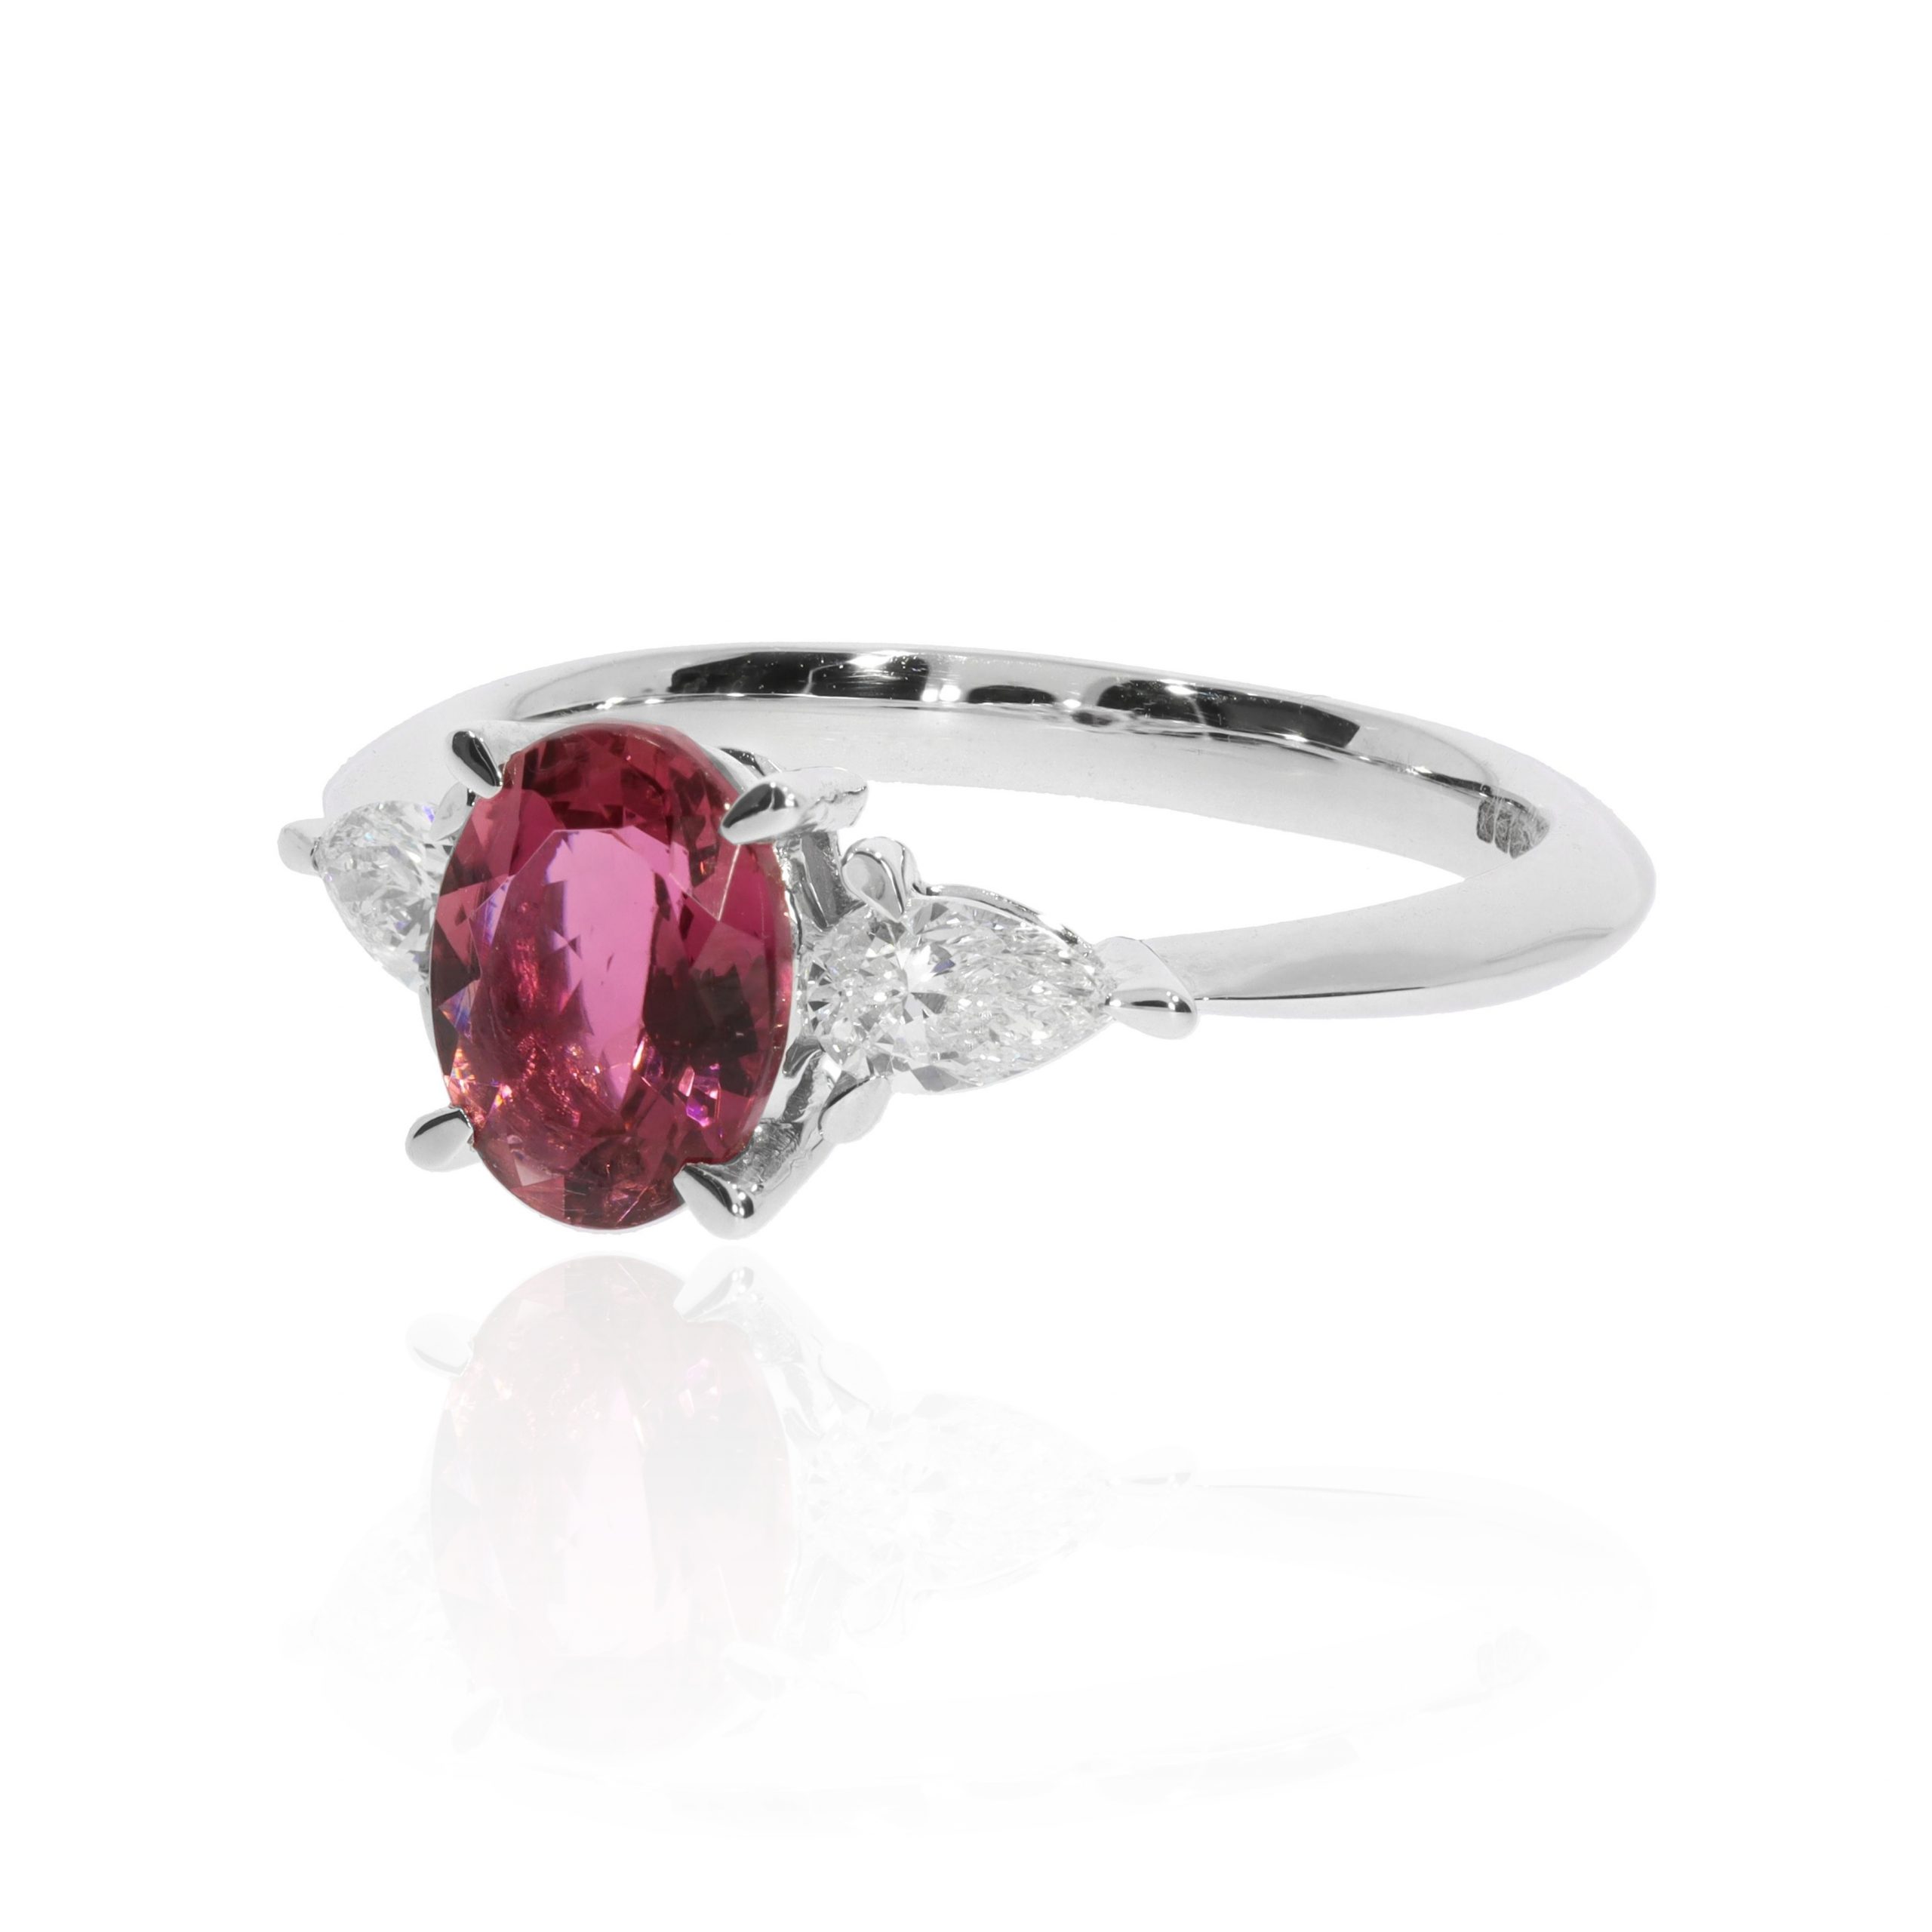 Gorgeous Pink Tourmaline and Diamond Ring